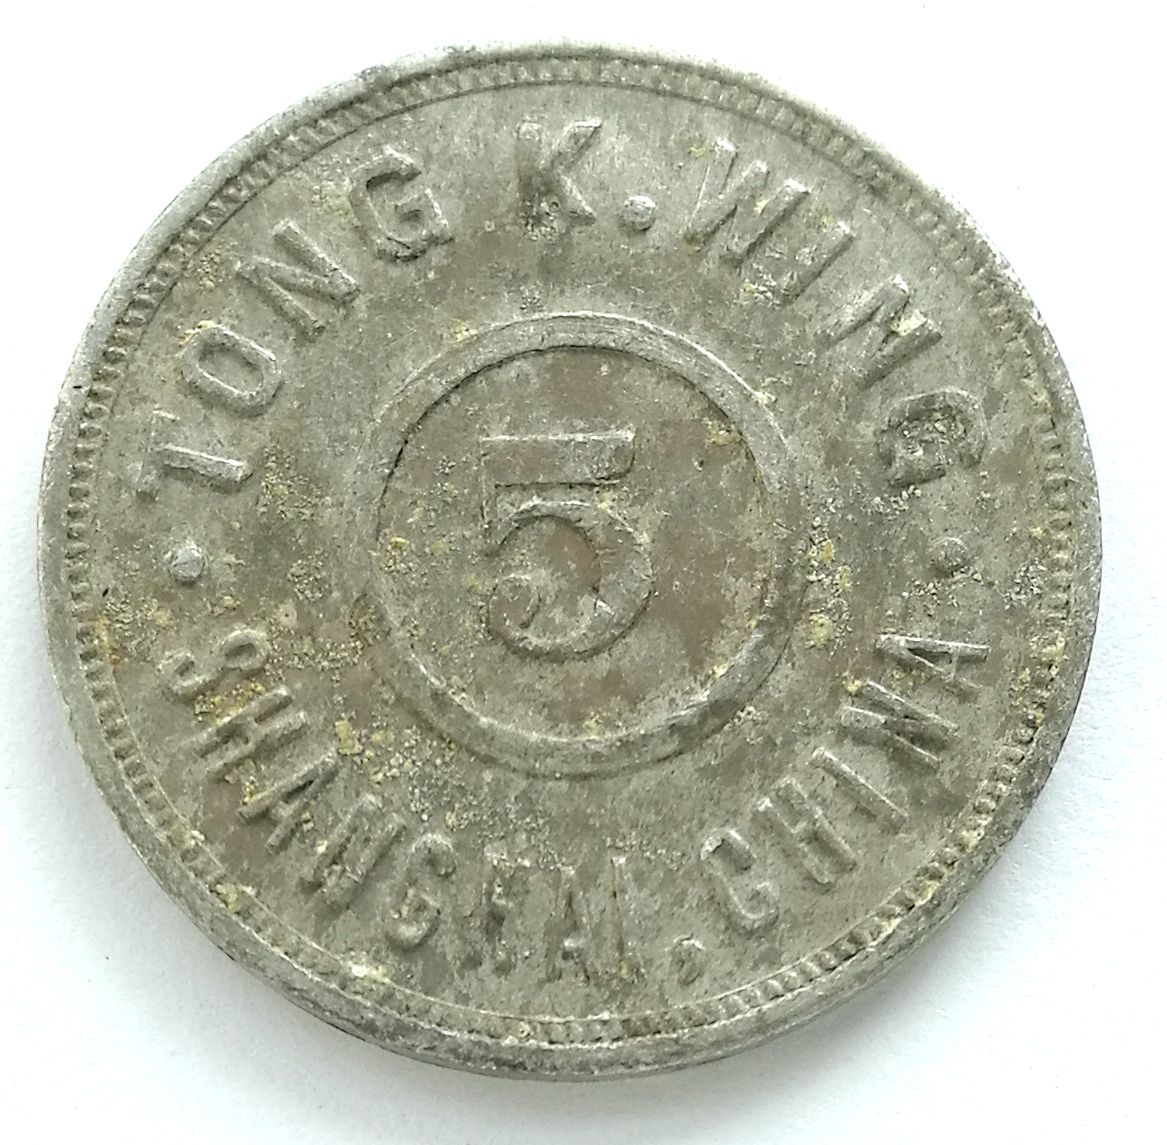 BT037, Shanghai "Tong K Wing" Club Token, 5 Cents, 1930's RARE!